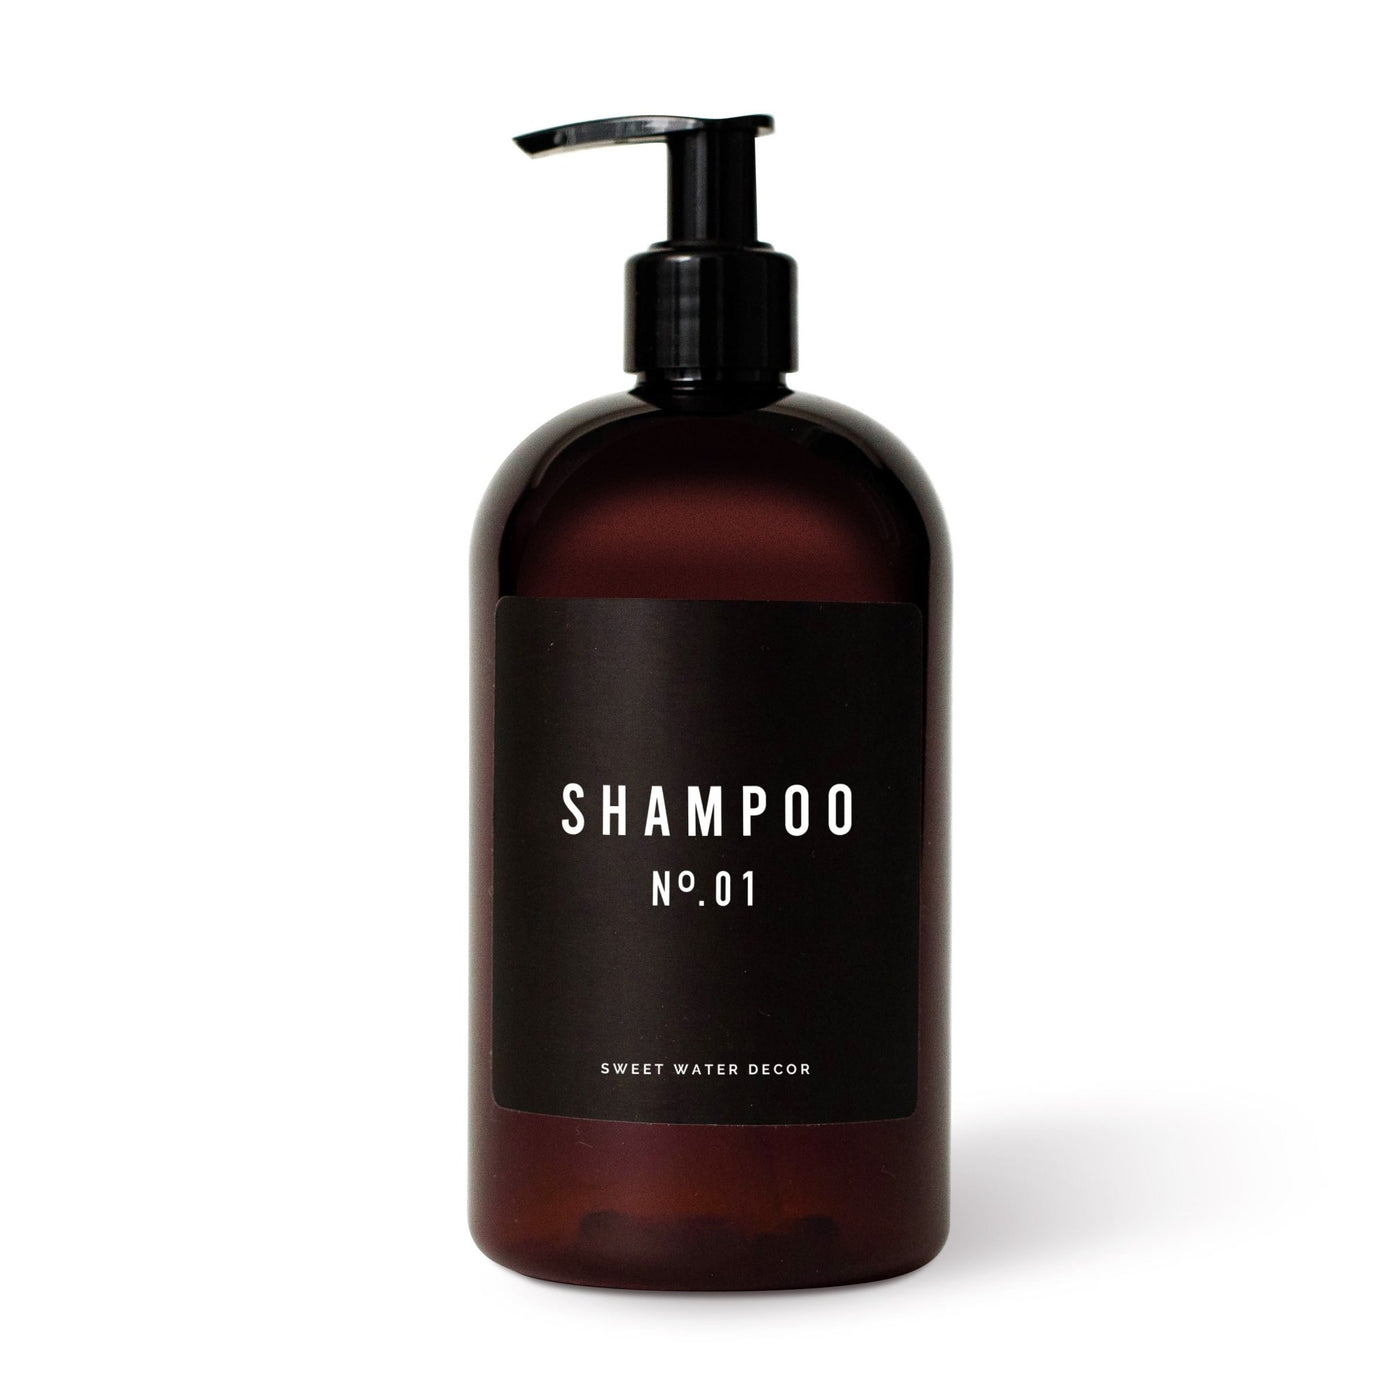 16oz Amber Plastic Shampoo Dispenser - Black Label - Sweet Water Decor - Dispensers